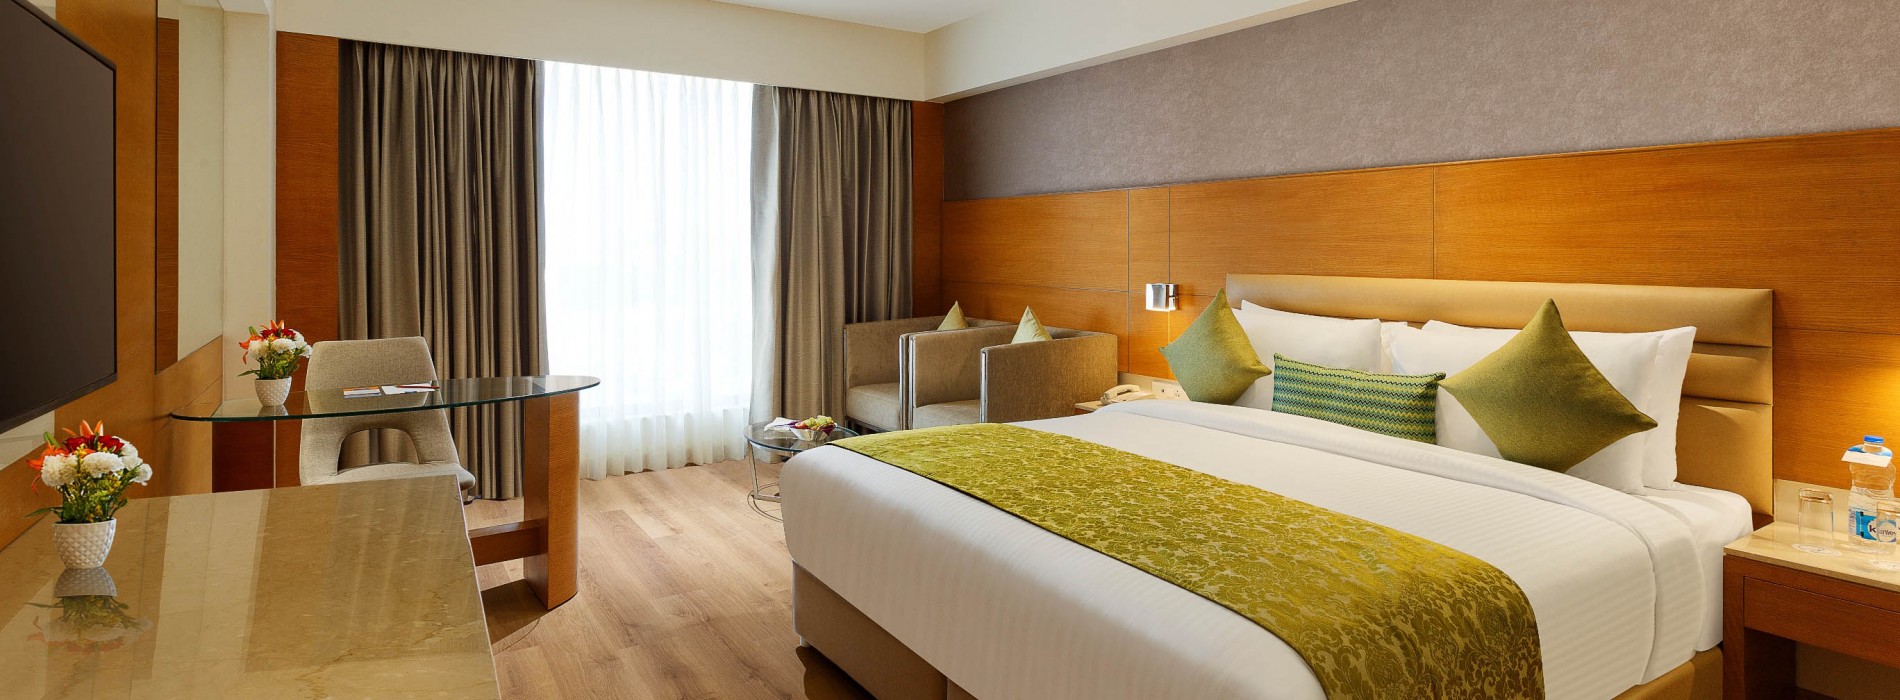 Sarovar Hotels & Resorts opens Jhansi’s first branded hotel